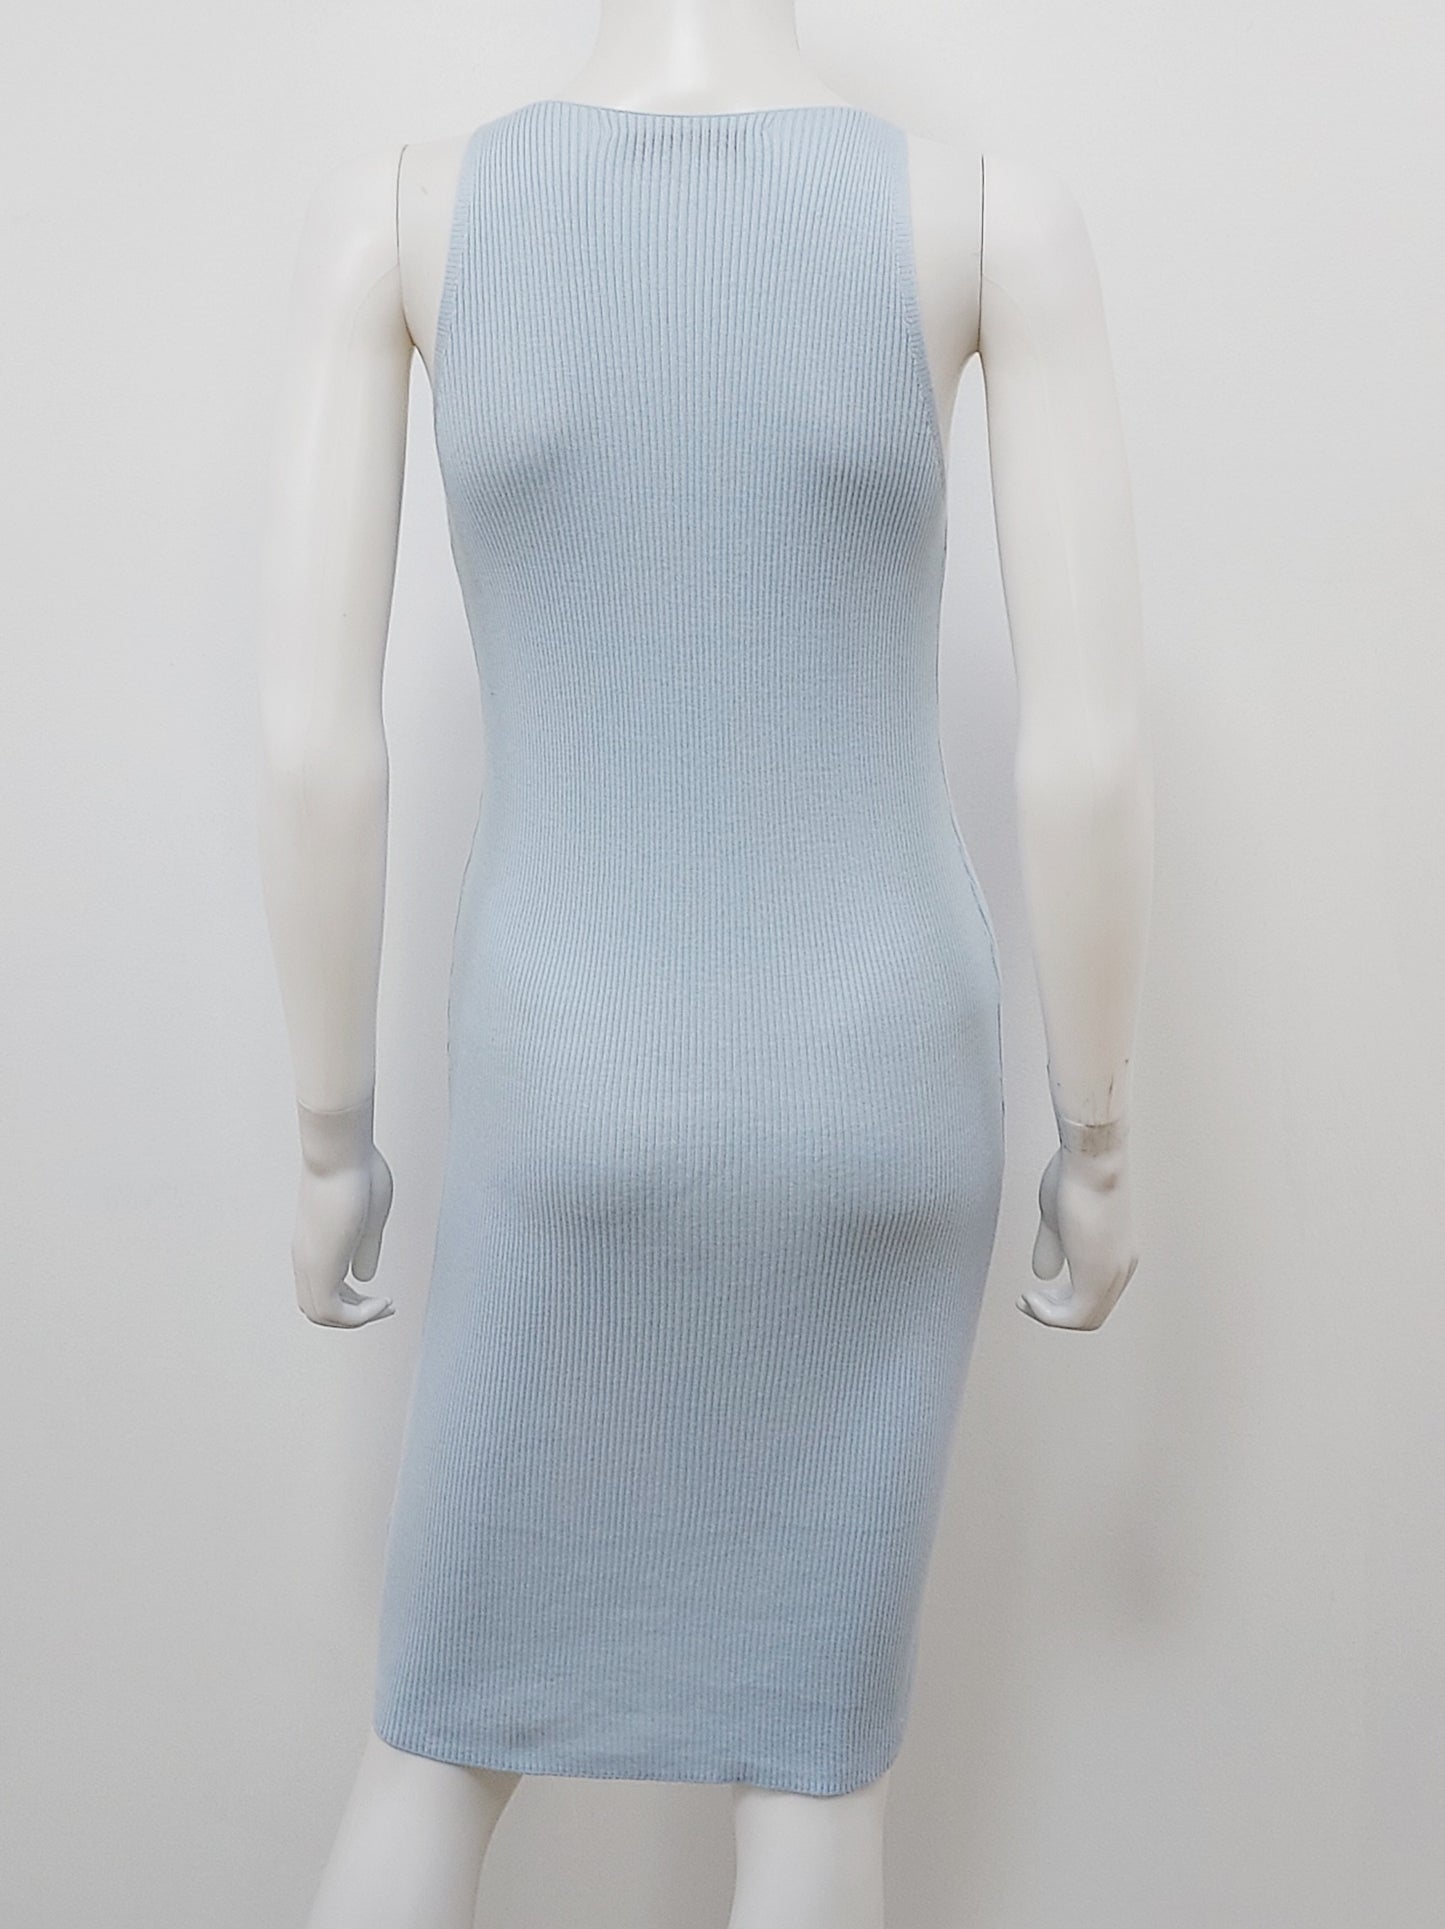 Cotton Viscose Stretch Cami Dress Size Medium (Fits Small)